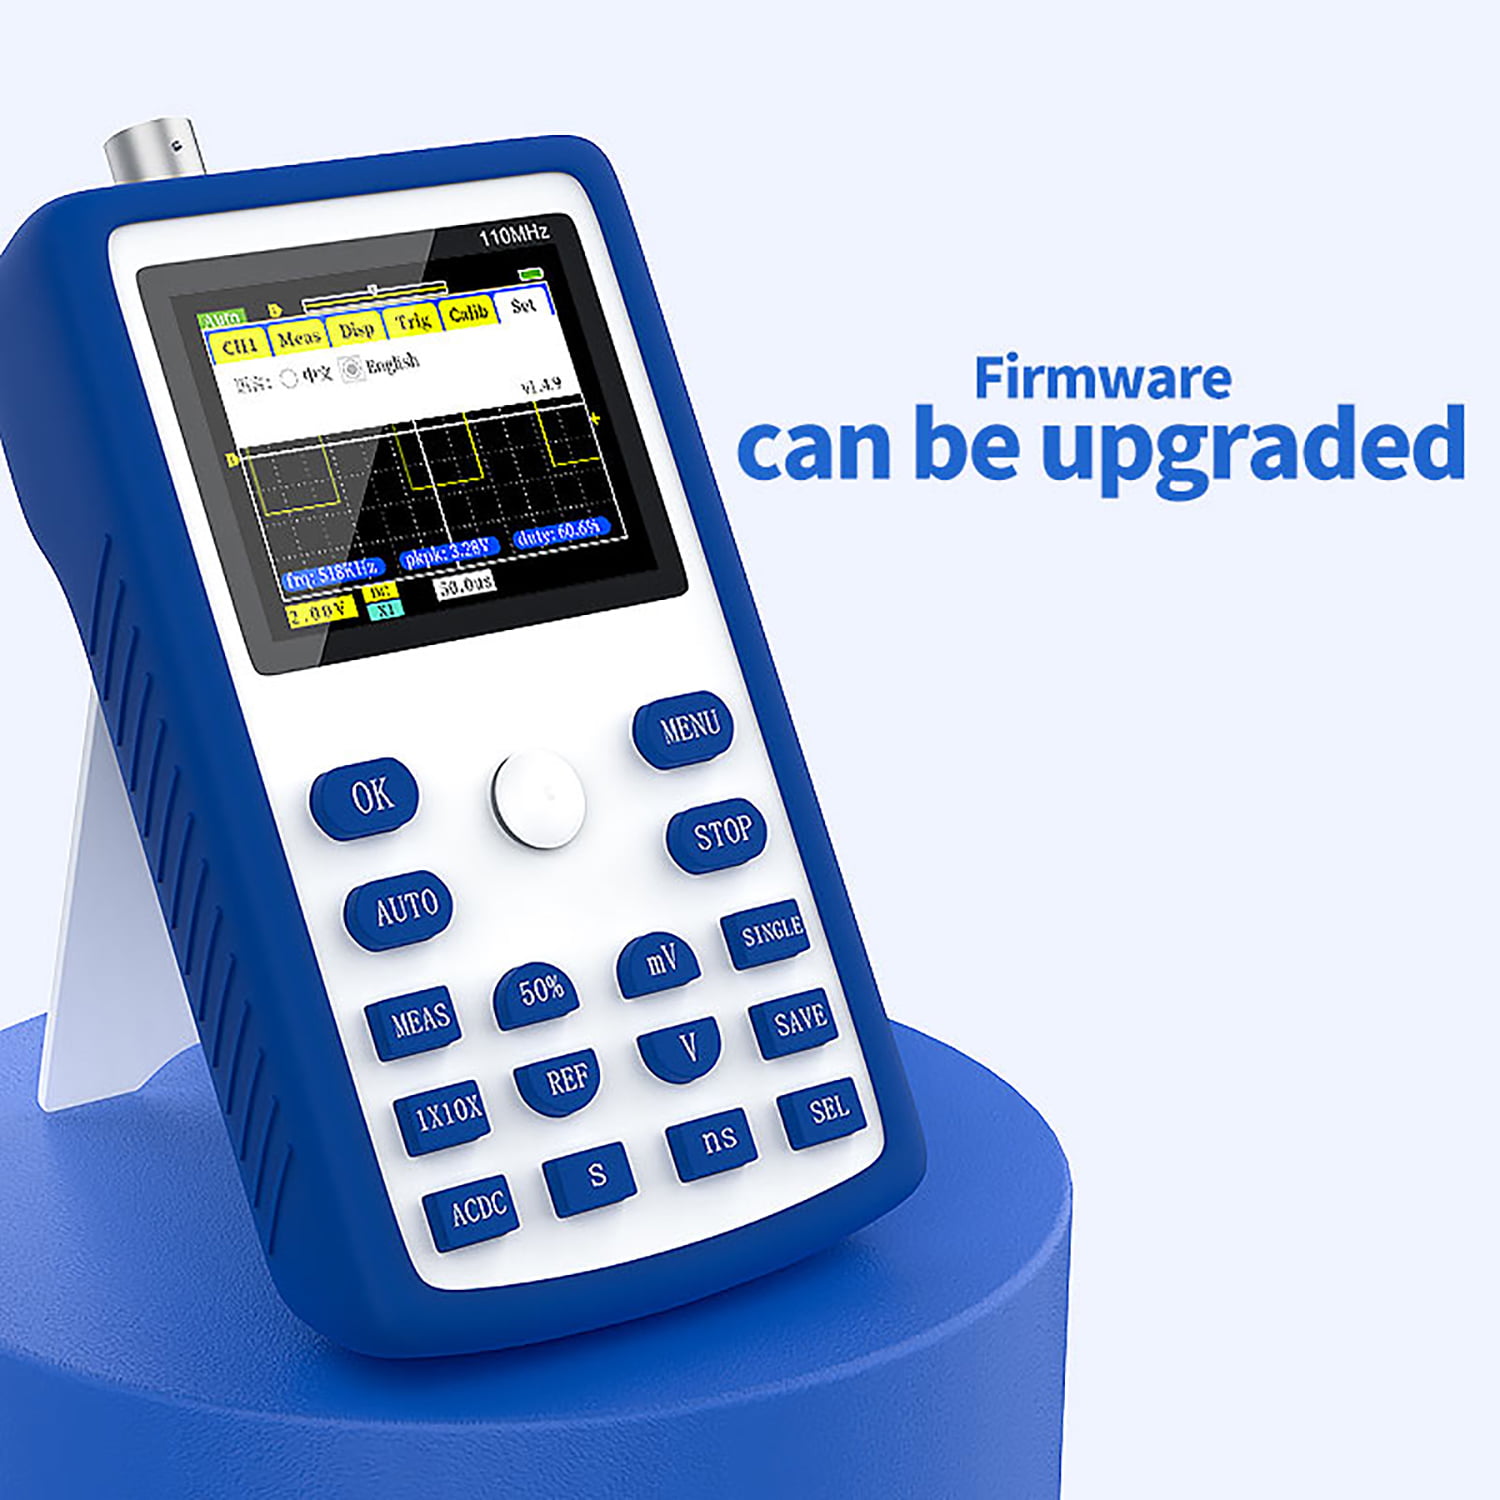 FNIRSI Portable Handheld Digital Storage Oscilloscope 110MHz Bandwidth 500MS/s